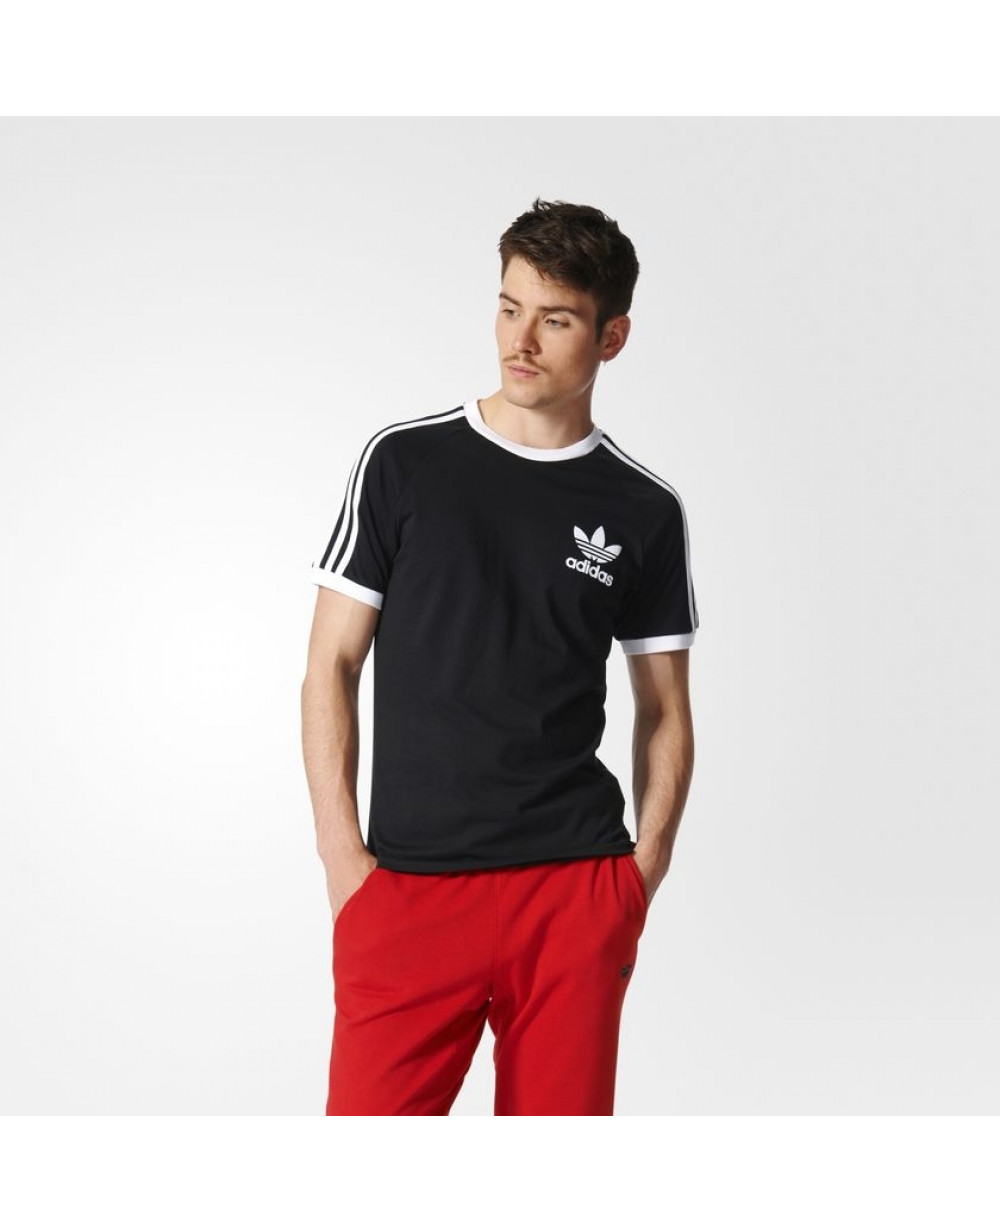 space Persistence Interpersonal Adidas Originals Clfn T-Shirt For Men AZ8127